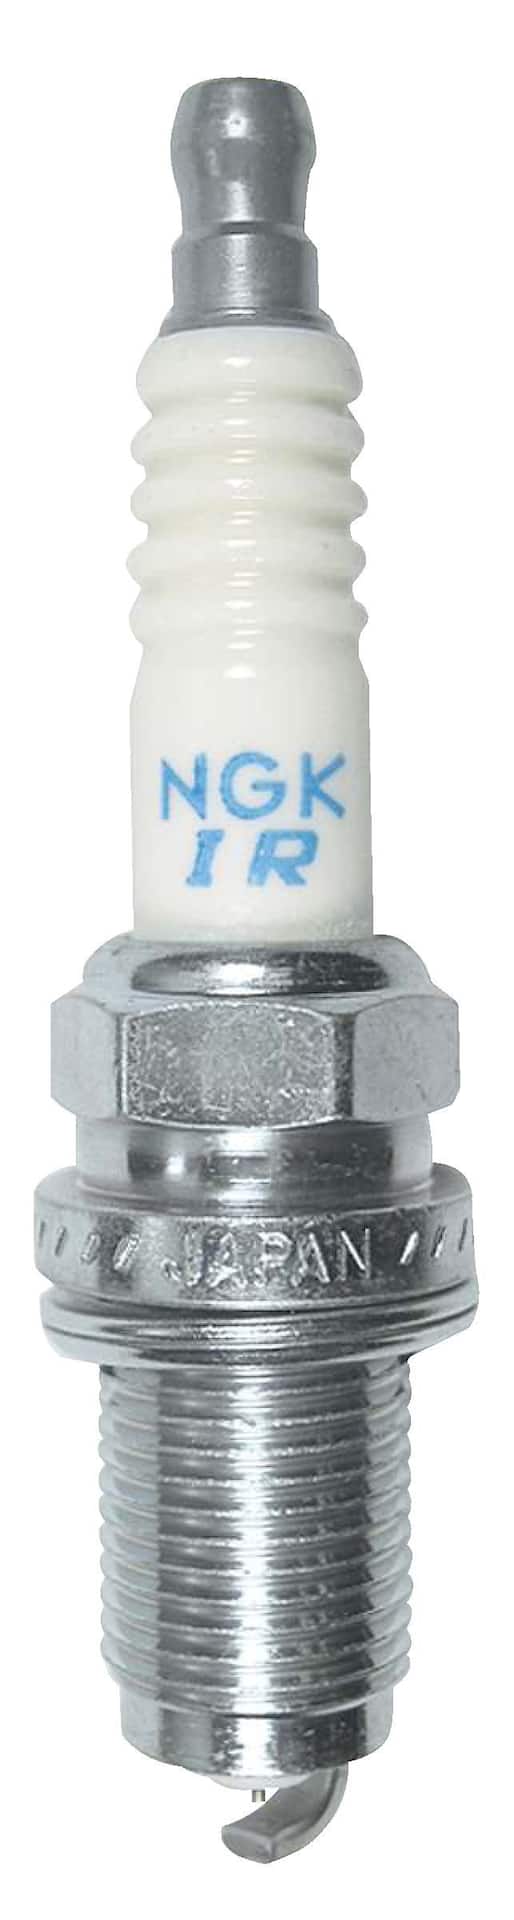 NGK Laser Iridium Spark Plug, 1-pk | Canadian Tire